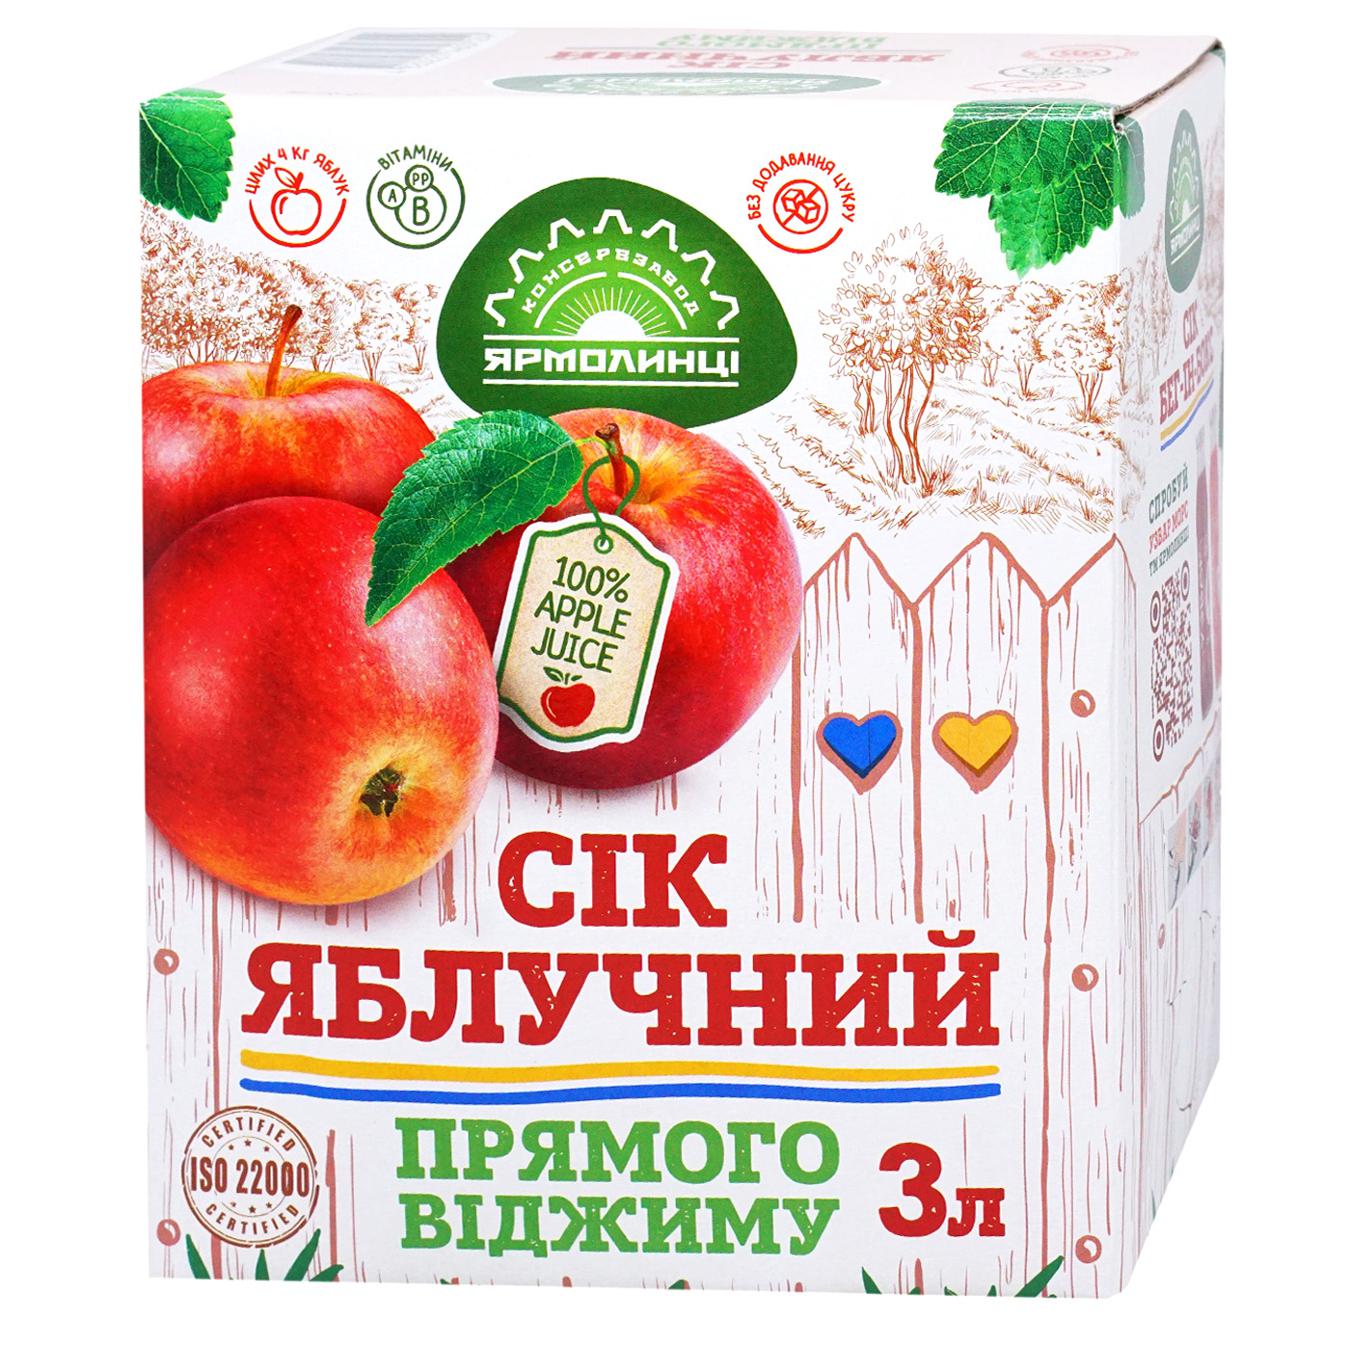 Yarmolynytsia apple juice 3l glass bottle